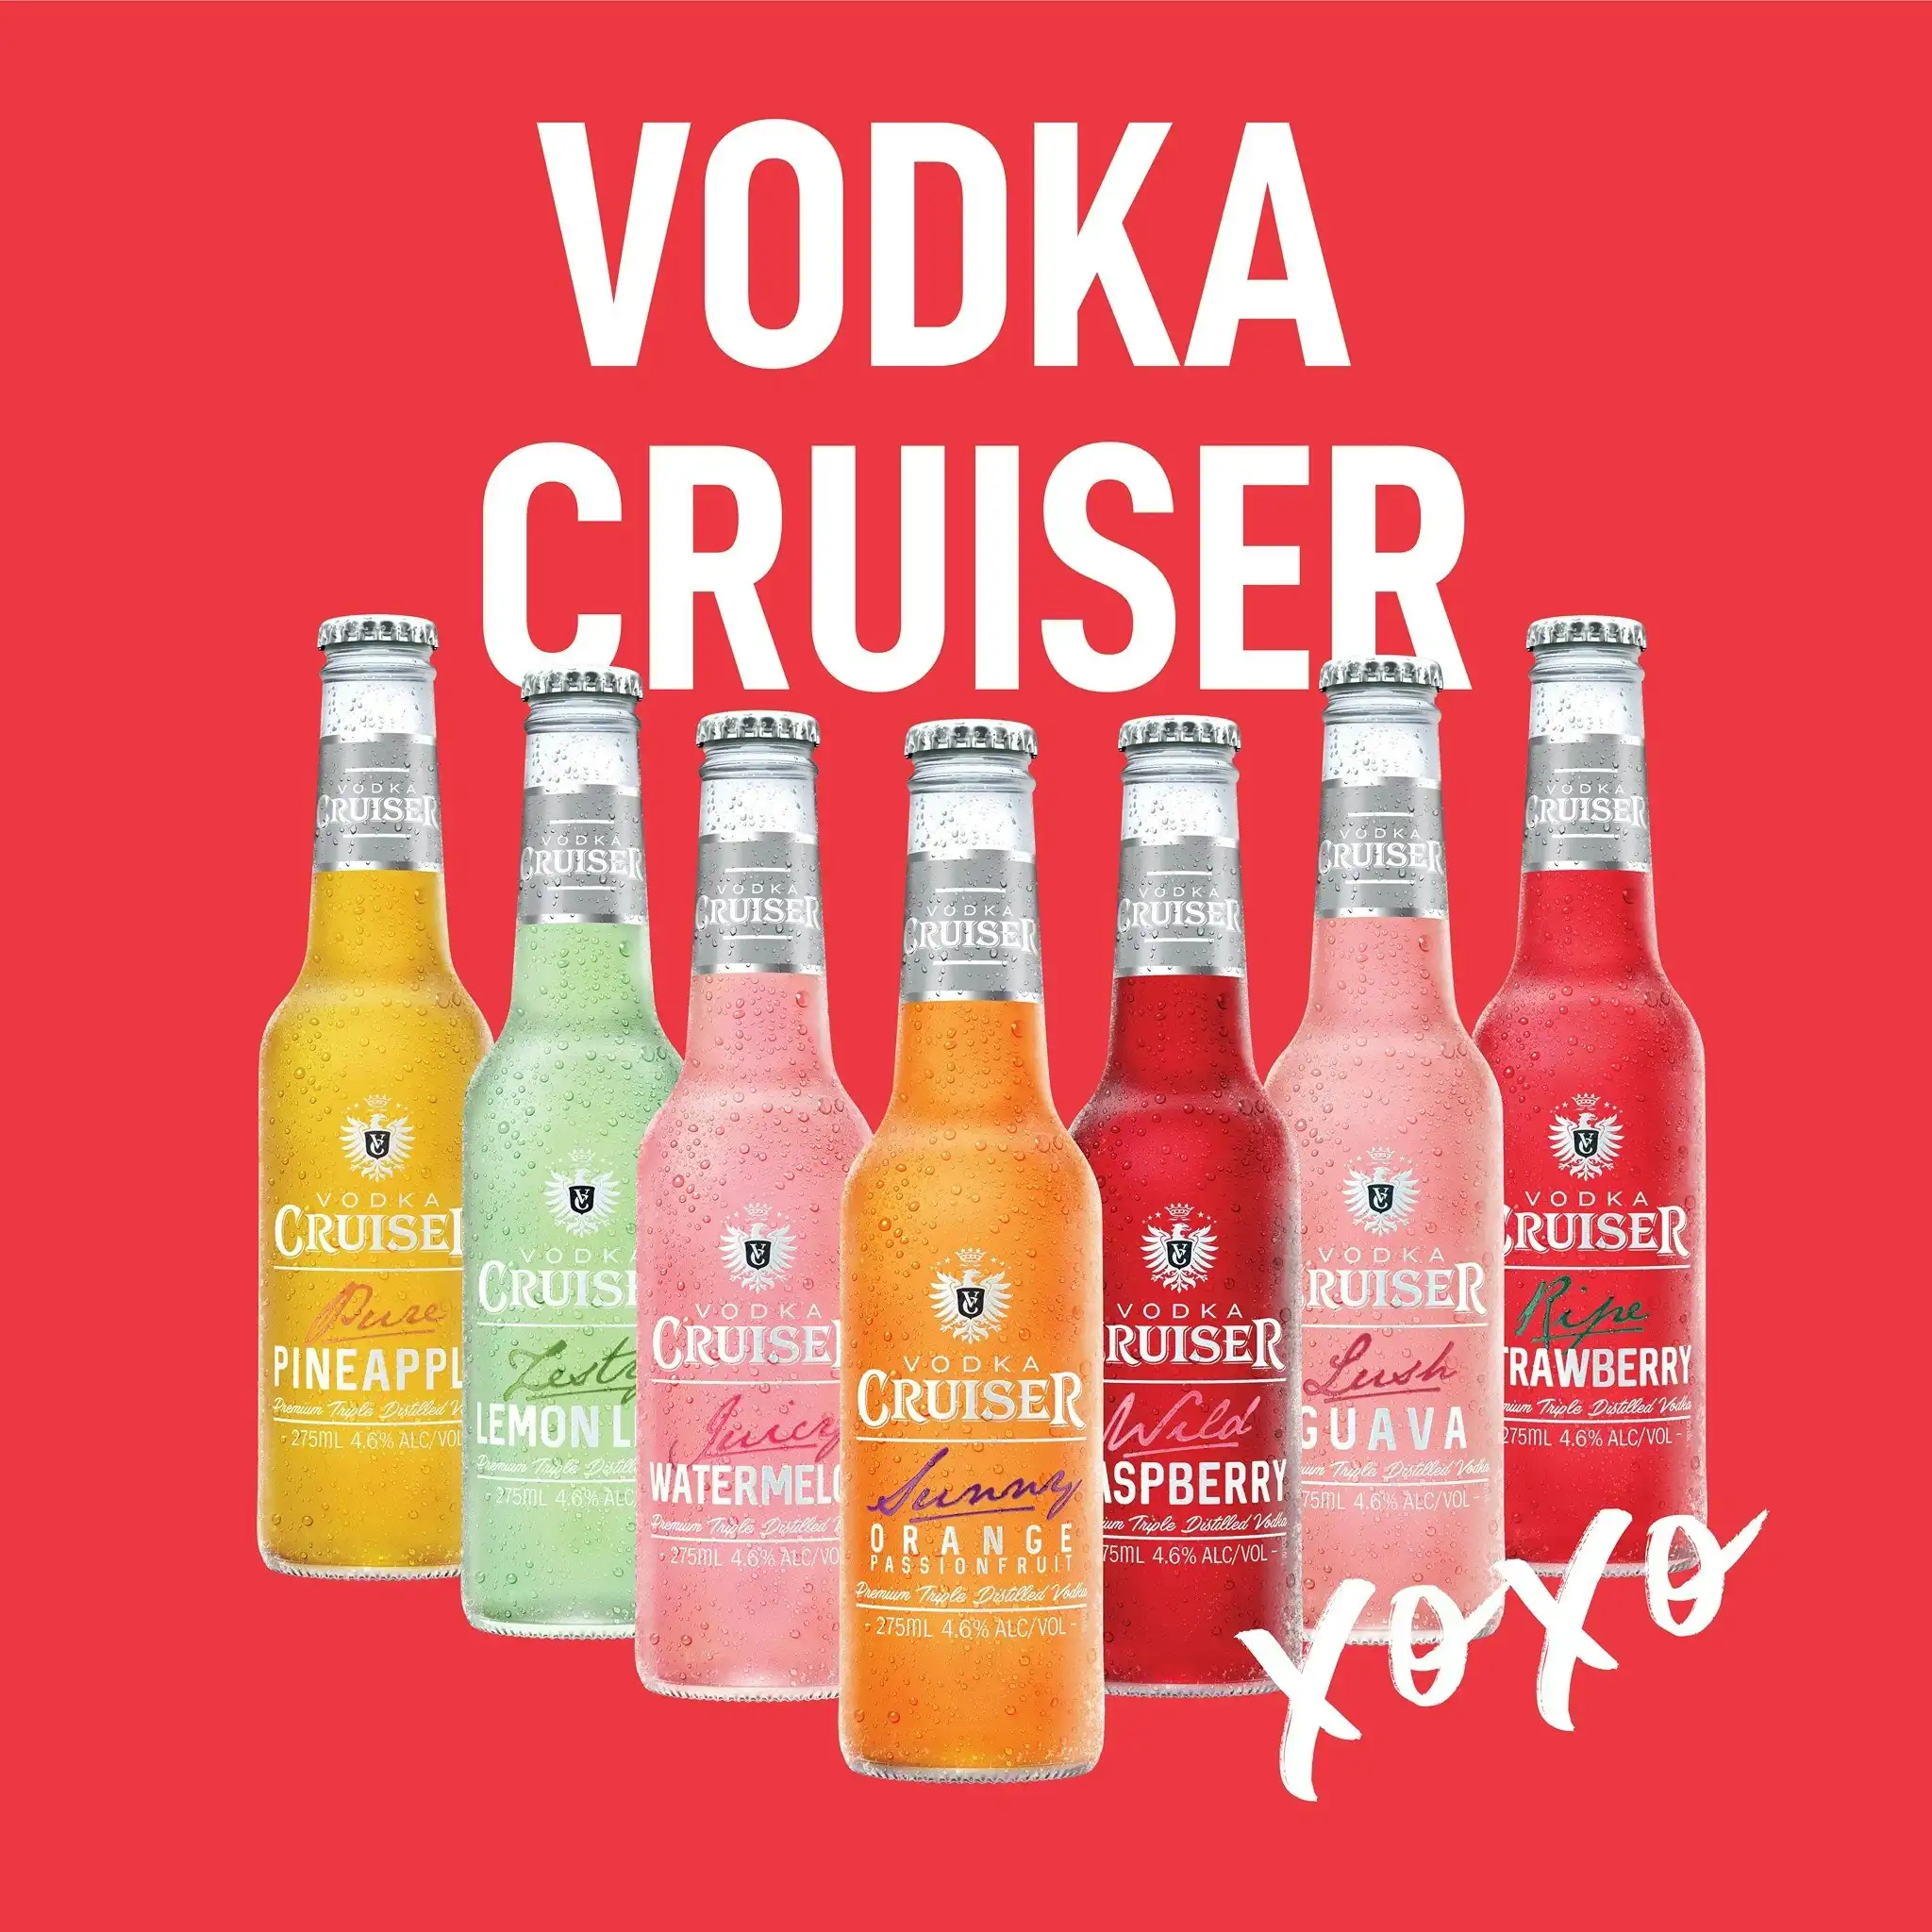 Vodka Cruiser Sunny Orange Passionfruit 4.6% 24 x 275mL Bottles